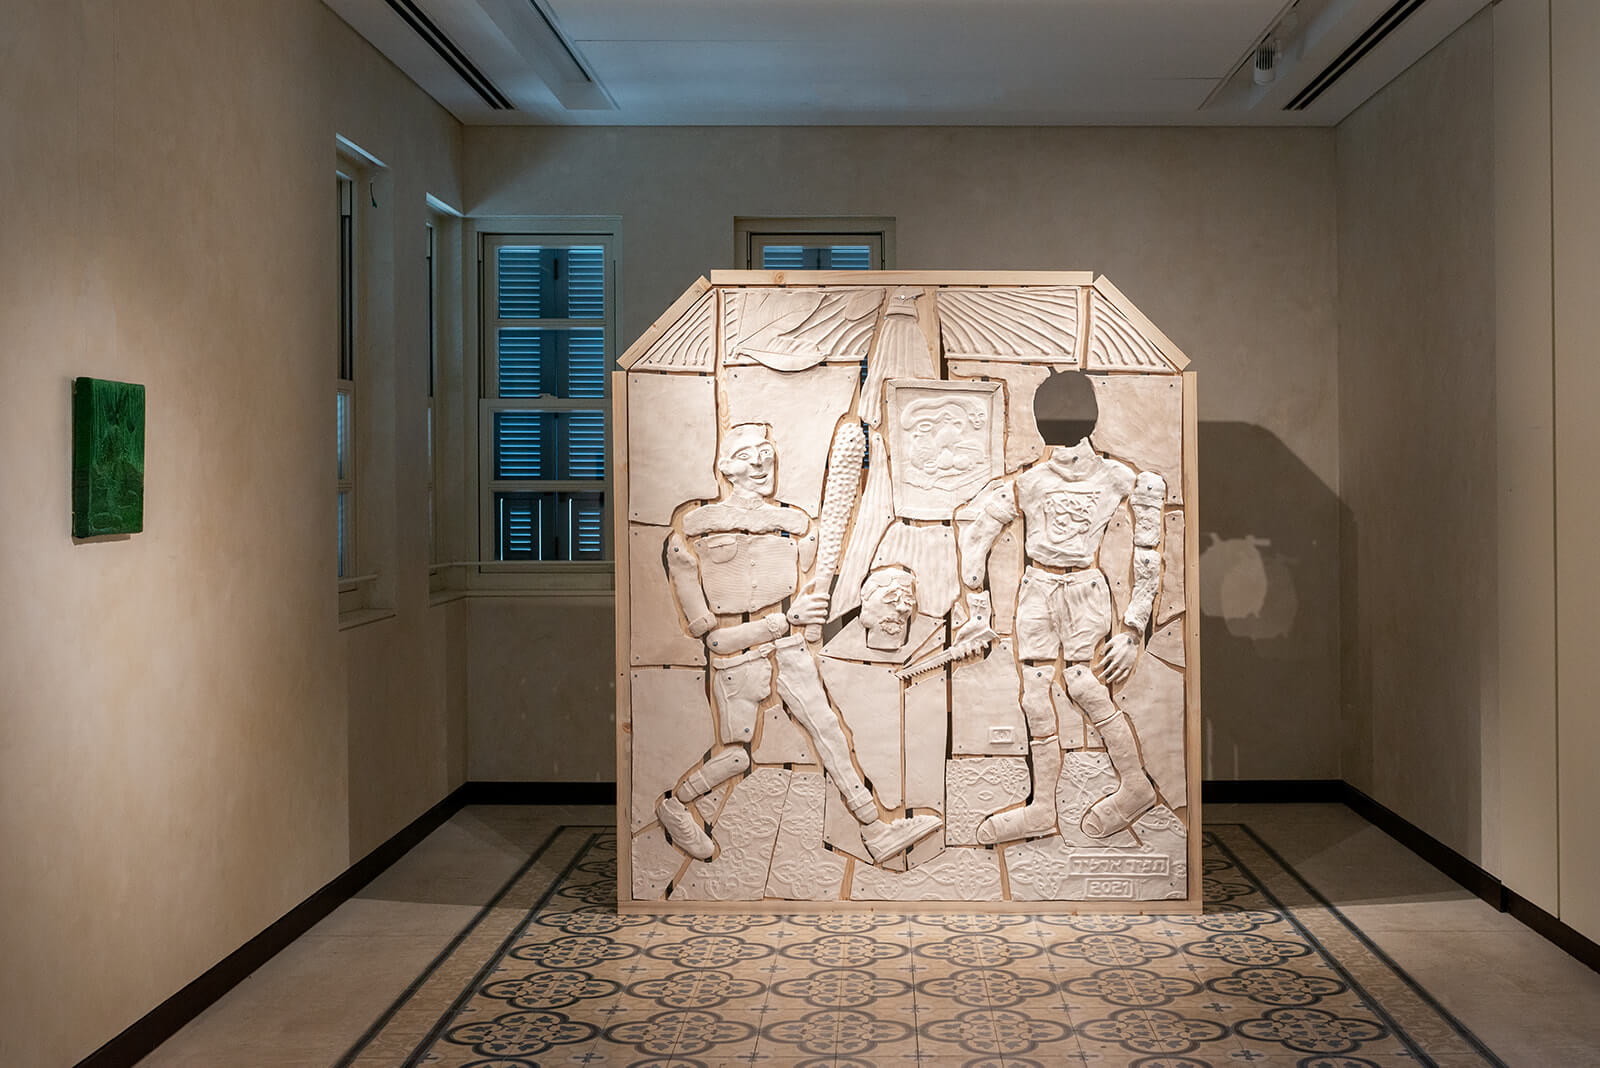 Tamir Erlich, Riot in the gallery, 2021, ceramics, wood, sandbags<br />
Photography: Neta Cones